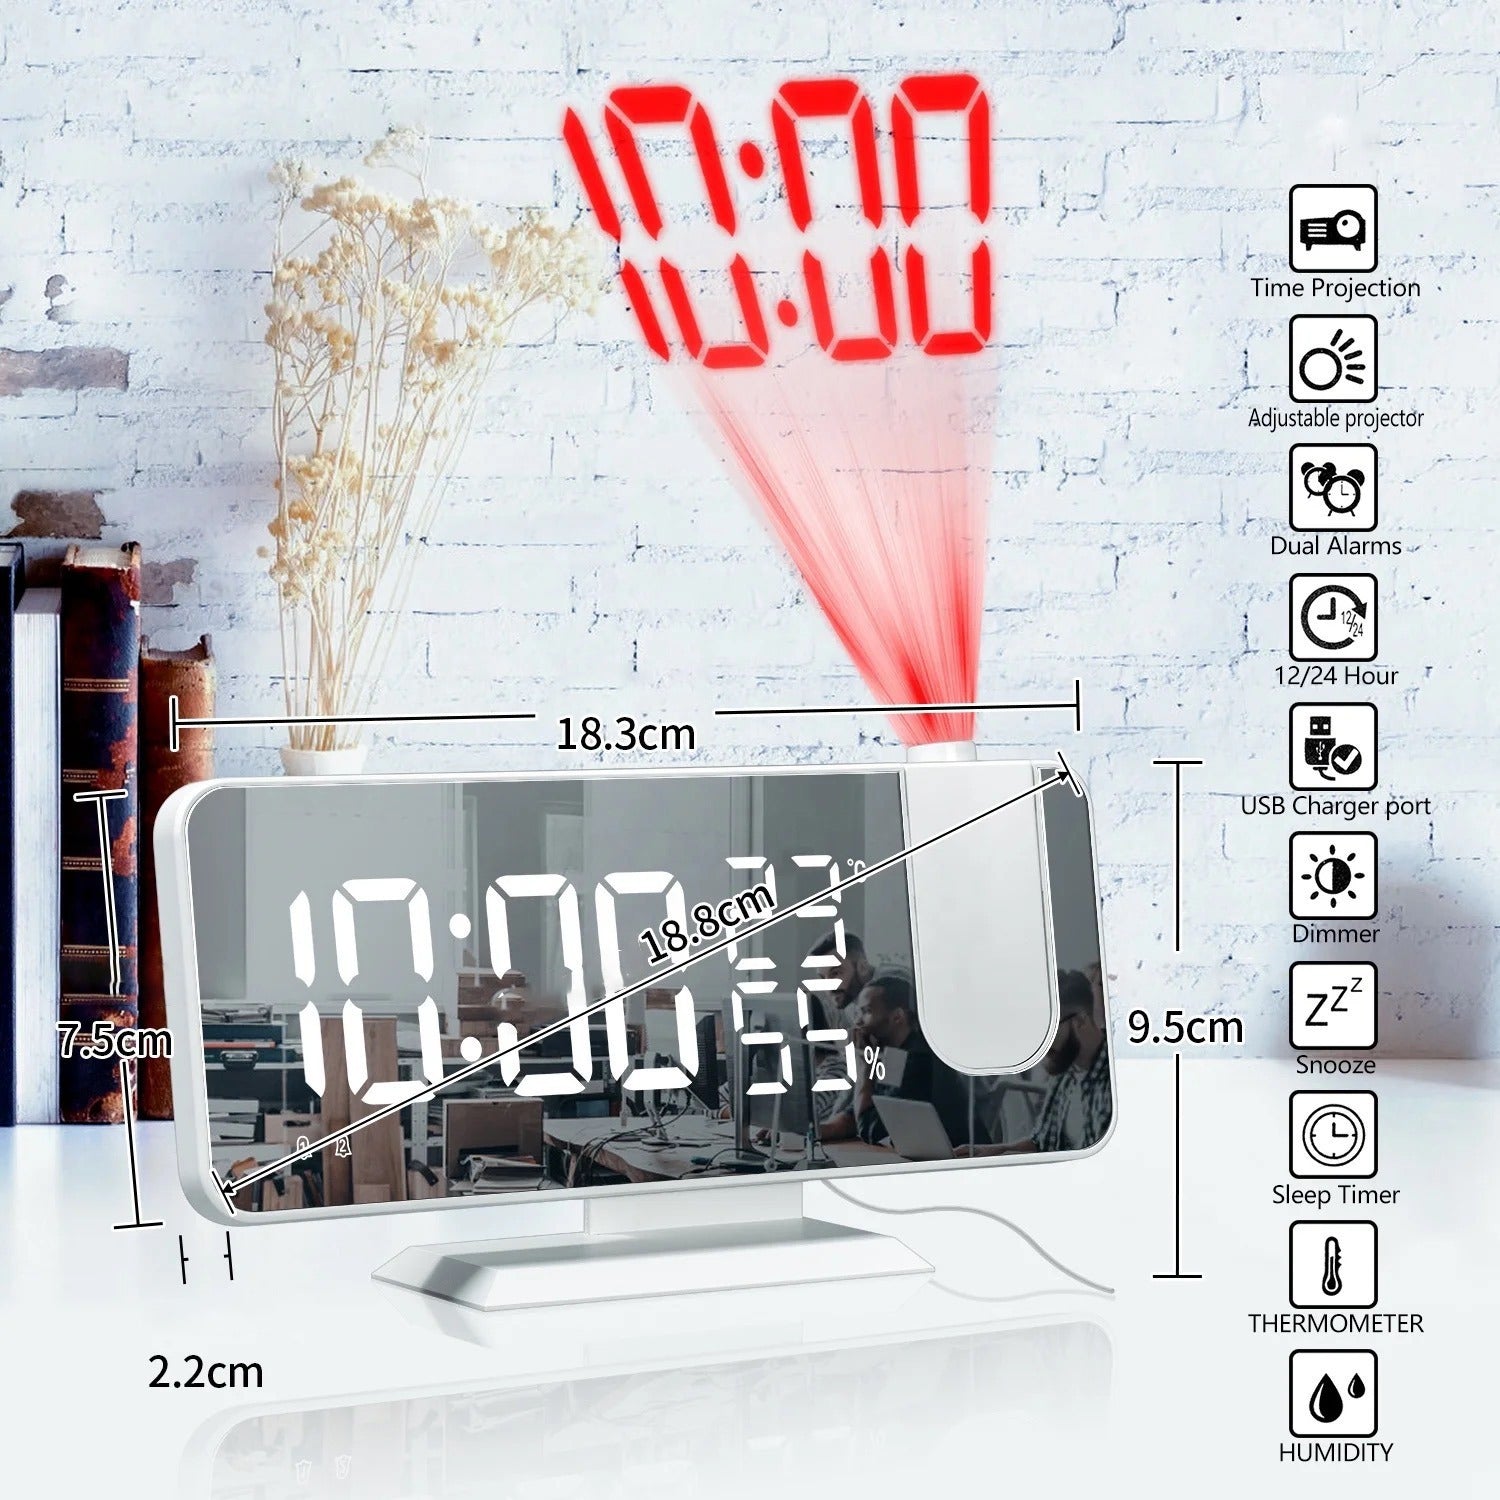 LED Projection Alarm Clock - Digital Display, Humidity, FM Radio, and Mirror Surface